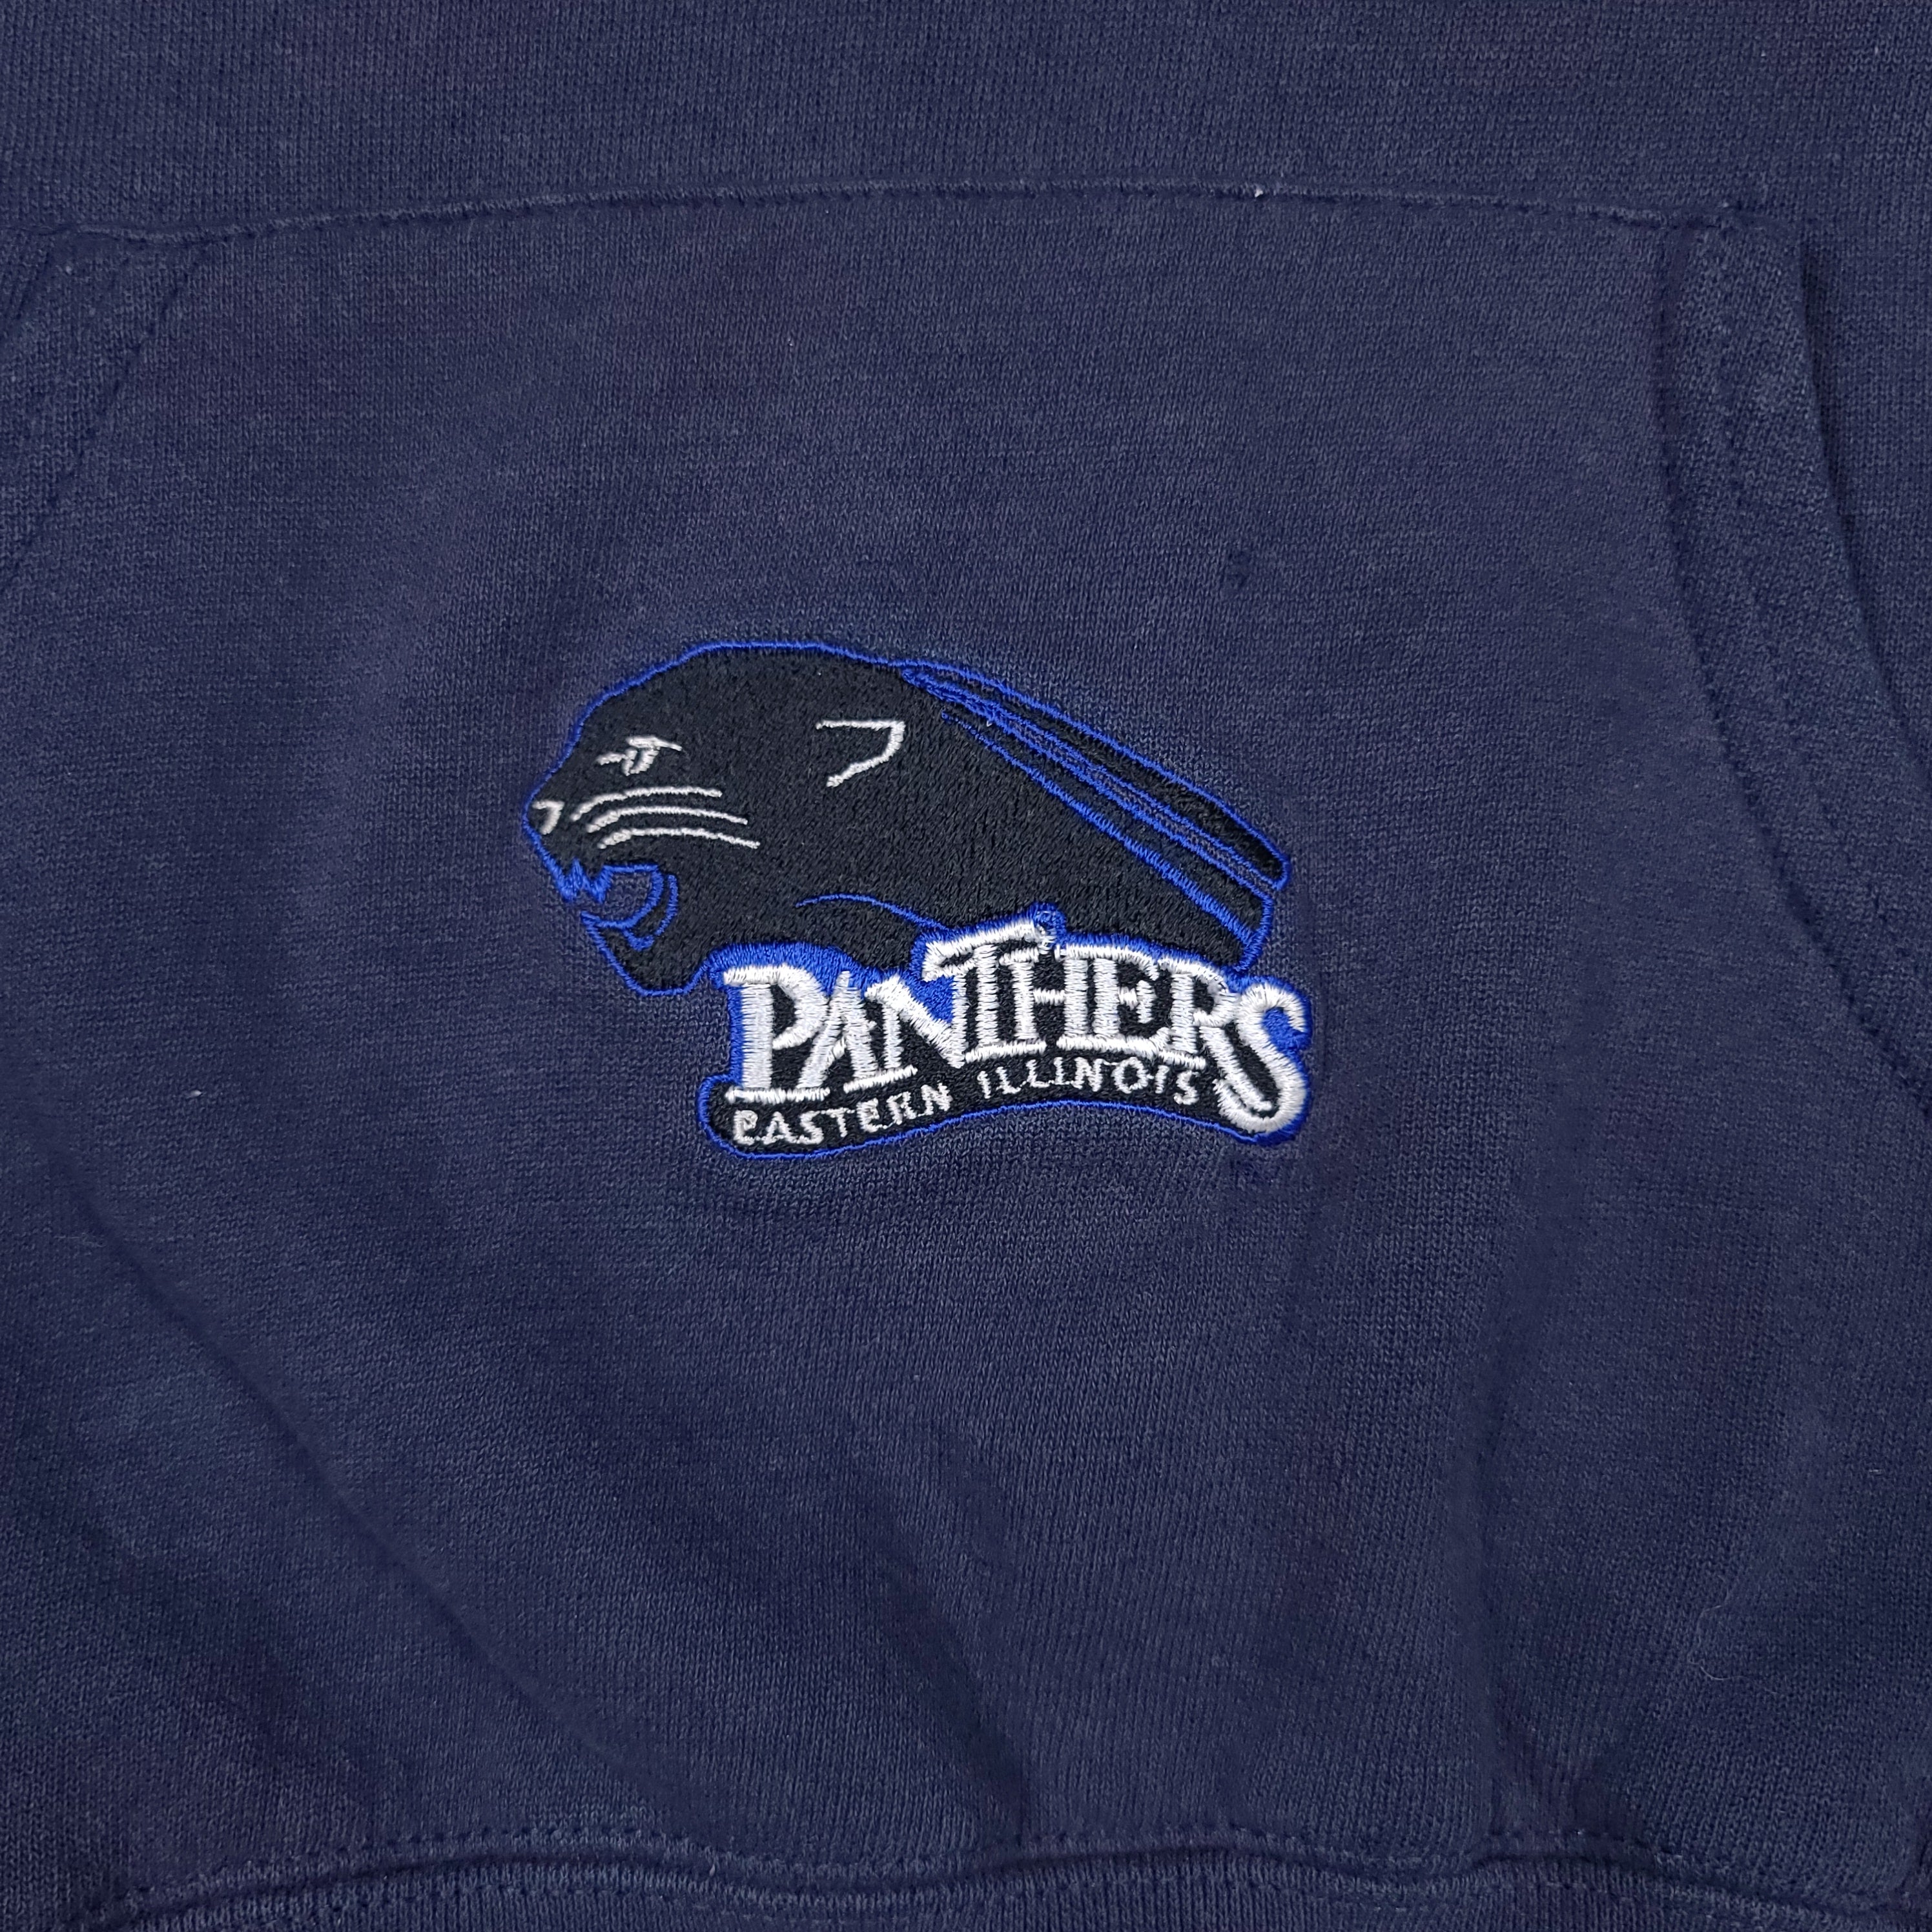 Vintage Eastern Illinois University Panthers Navy Blue Hoodie